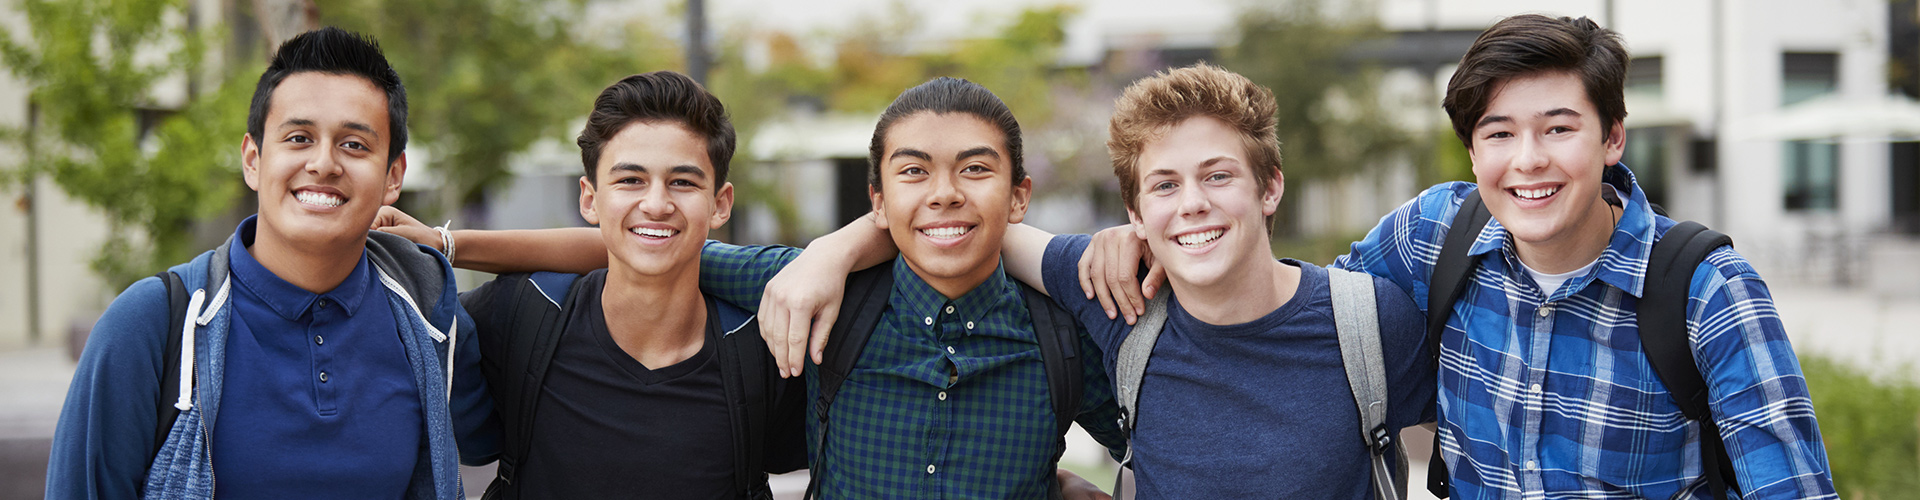 5 teen boys posing for group photo